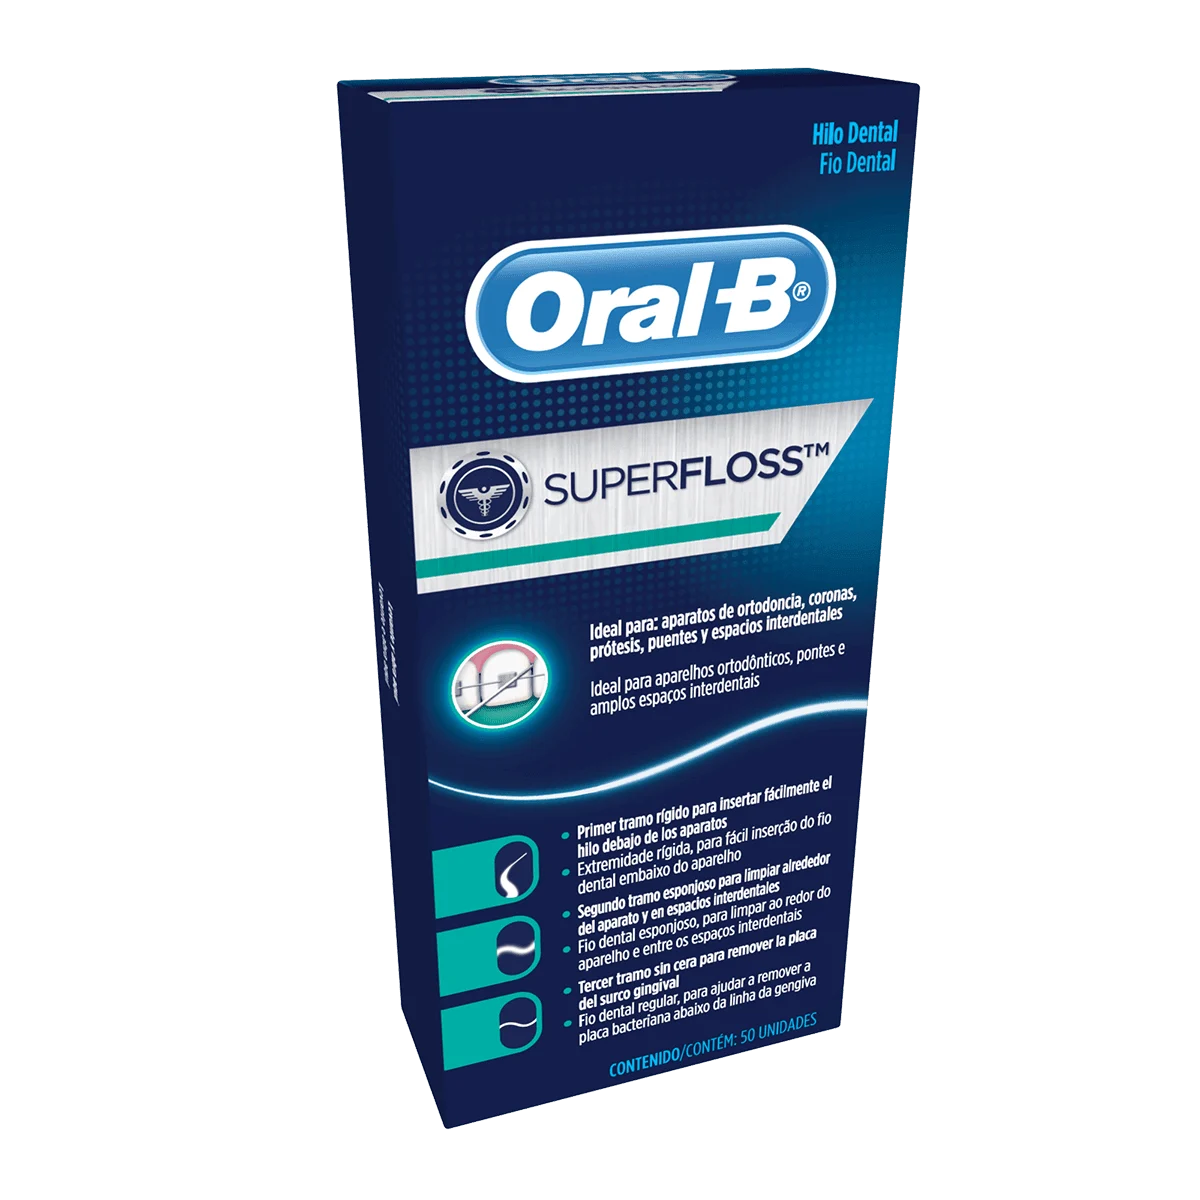 Hilo Dental Oral-B® Superfloss 